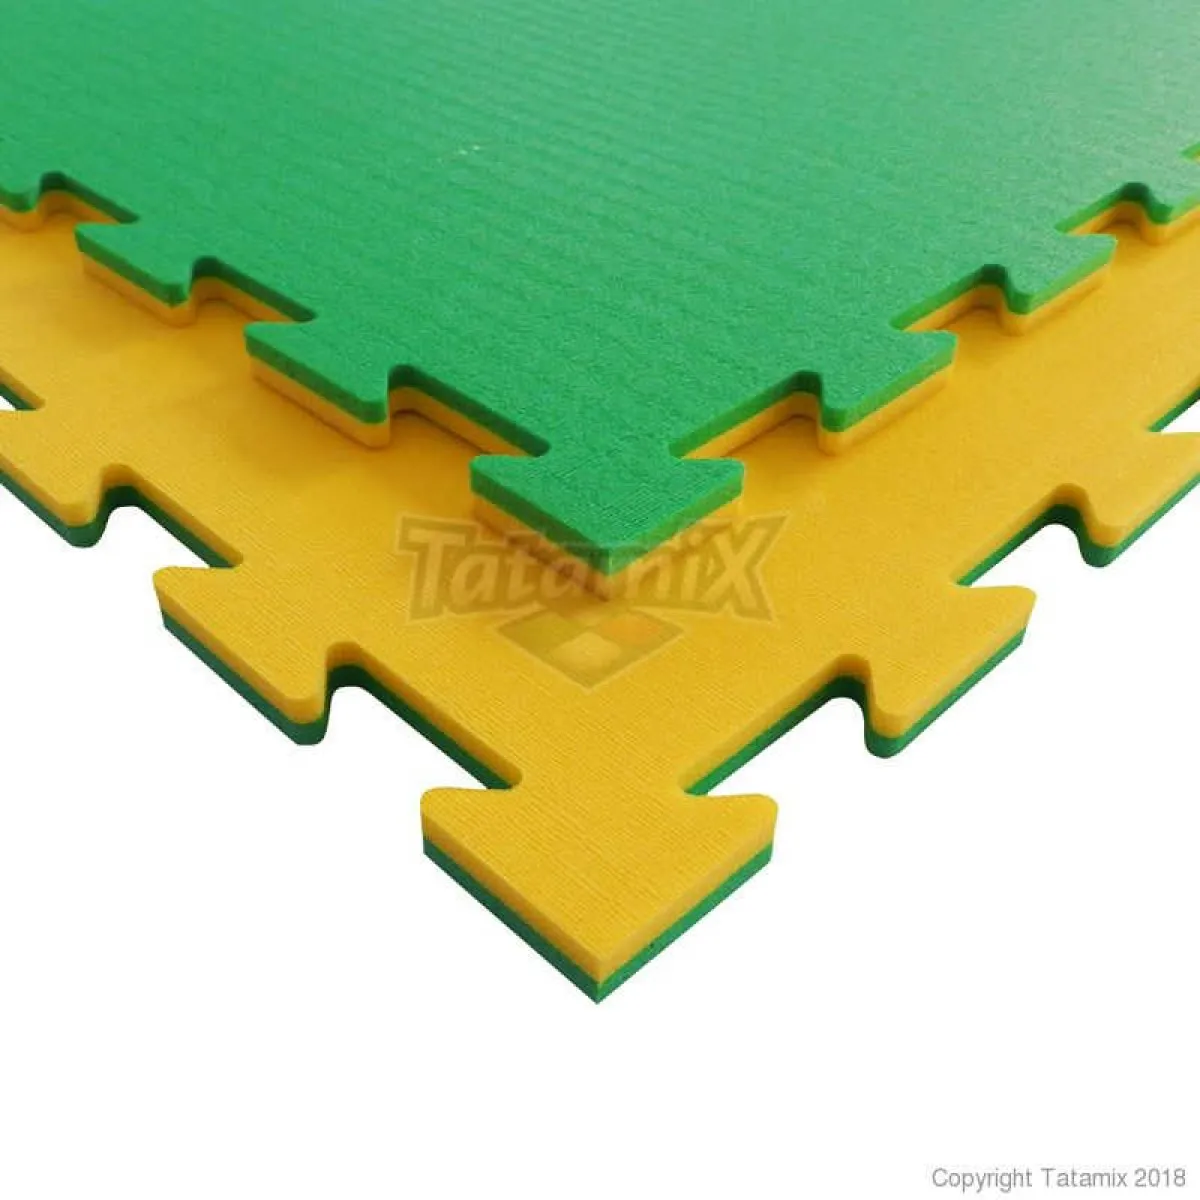 Kampsportsmåtte Tatami School B14FR gul/grøn 100 cm x 100 cm x 1,4 cm